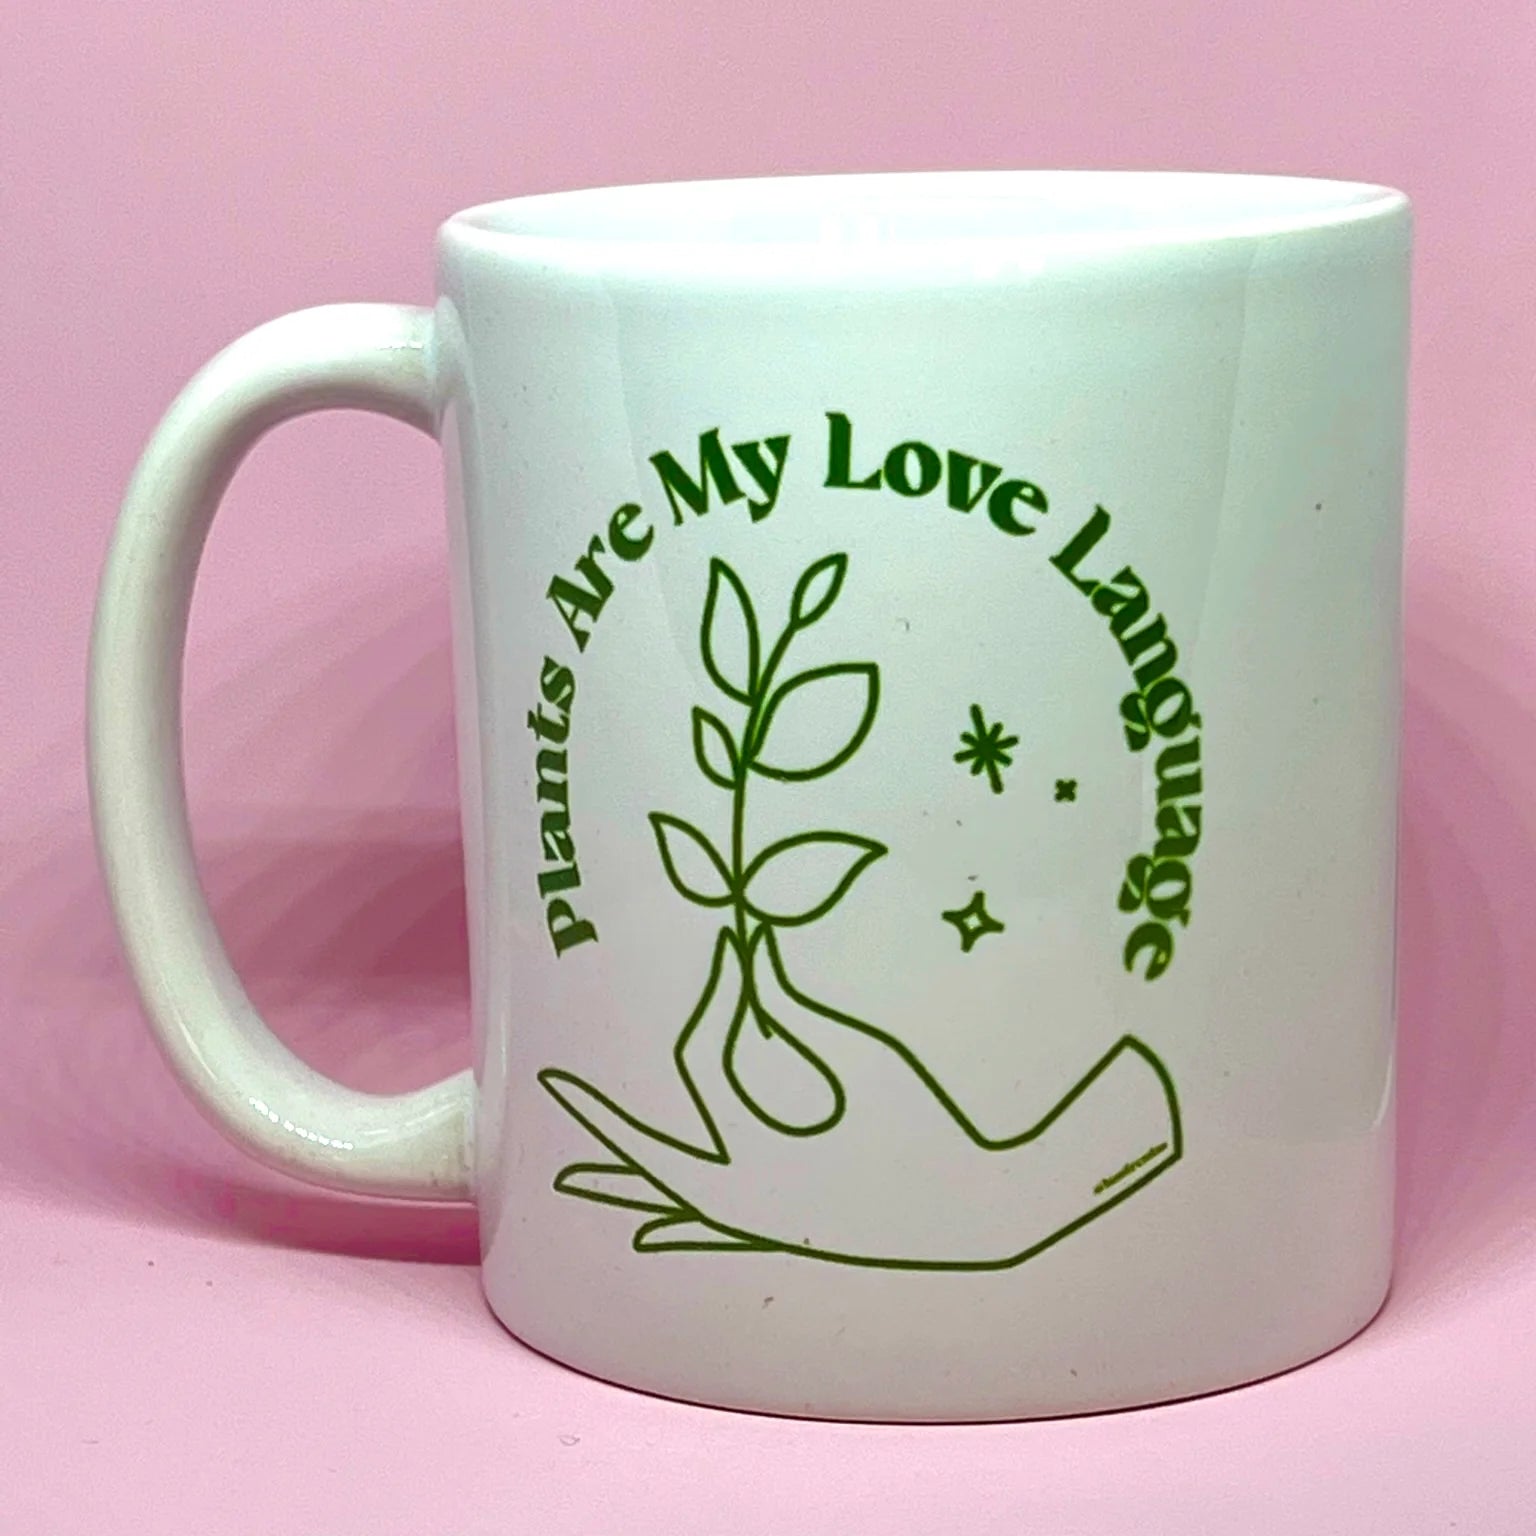 Plants are my love language coffee mug - Las Ofrendas 